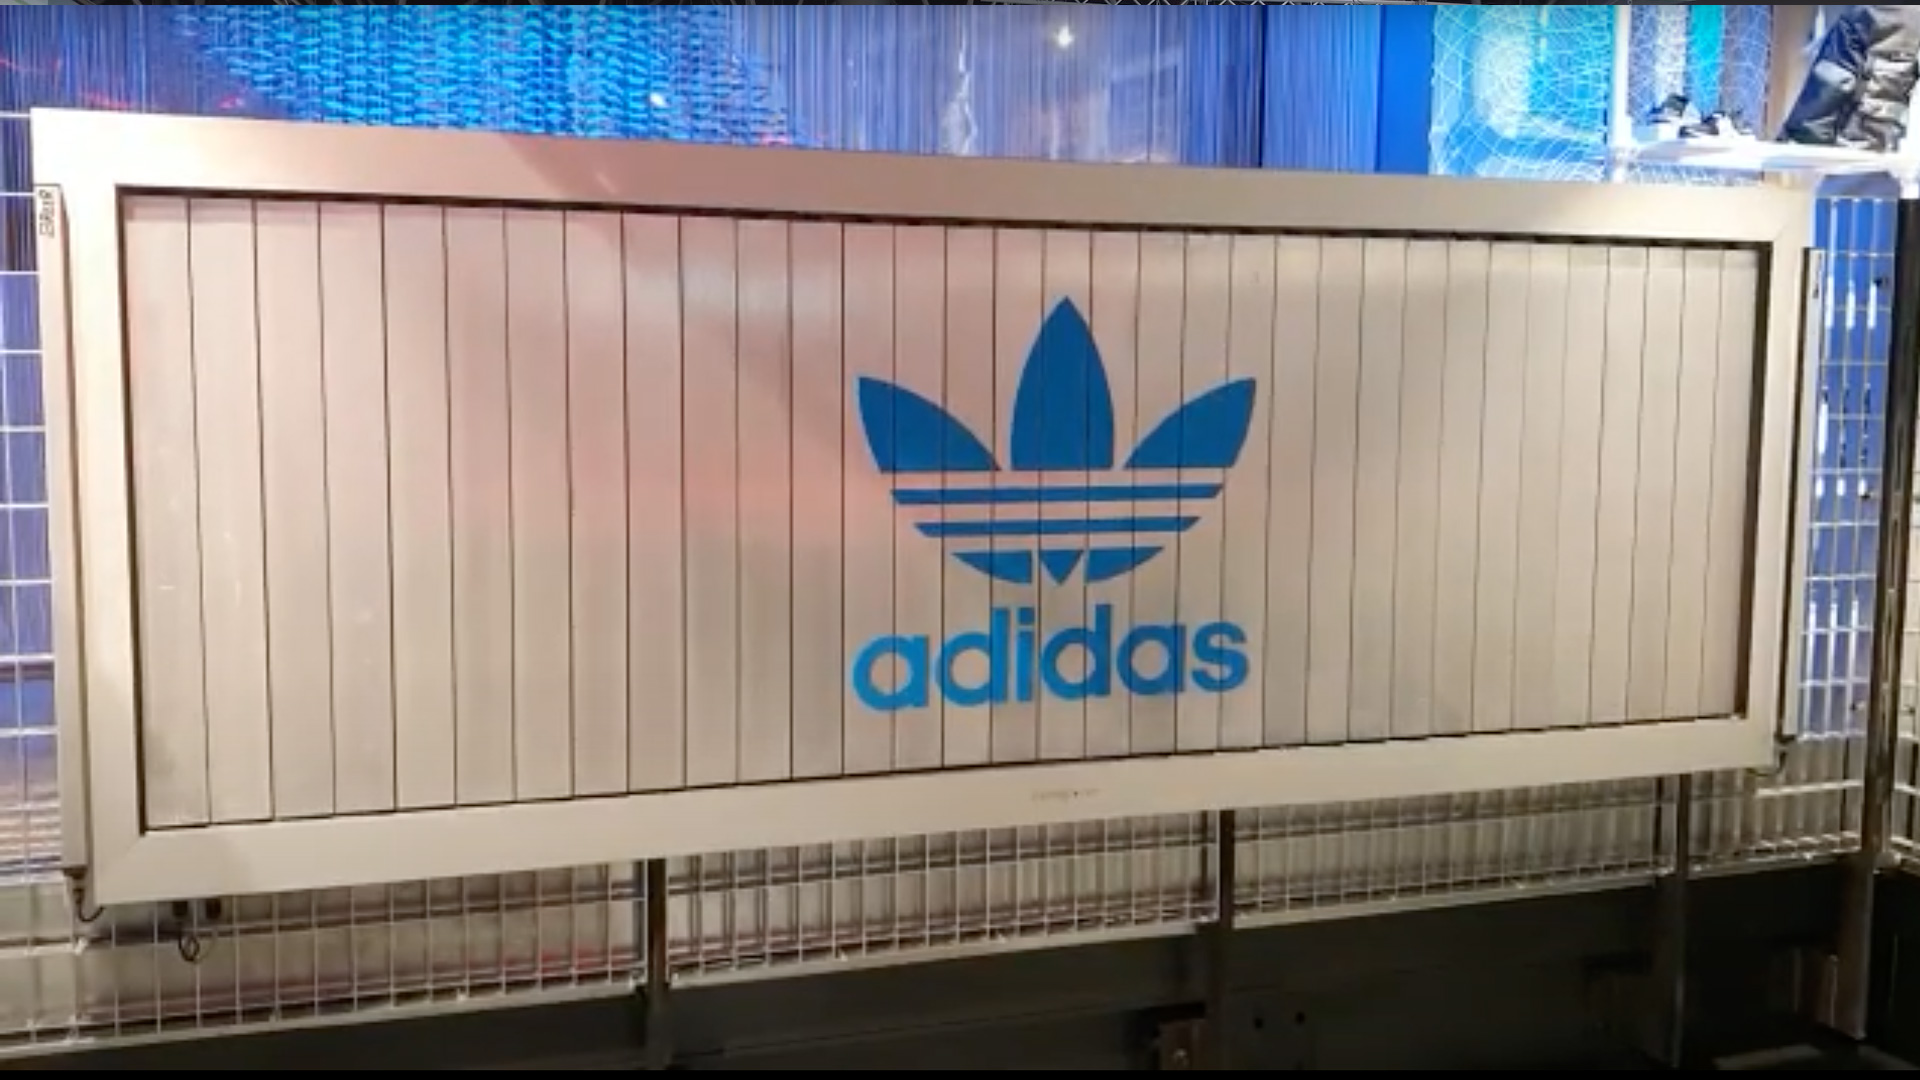 Adidas sign